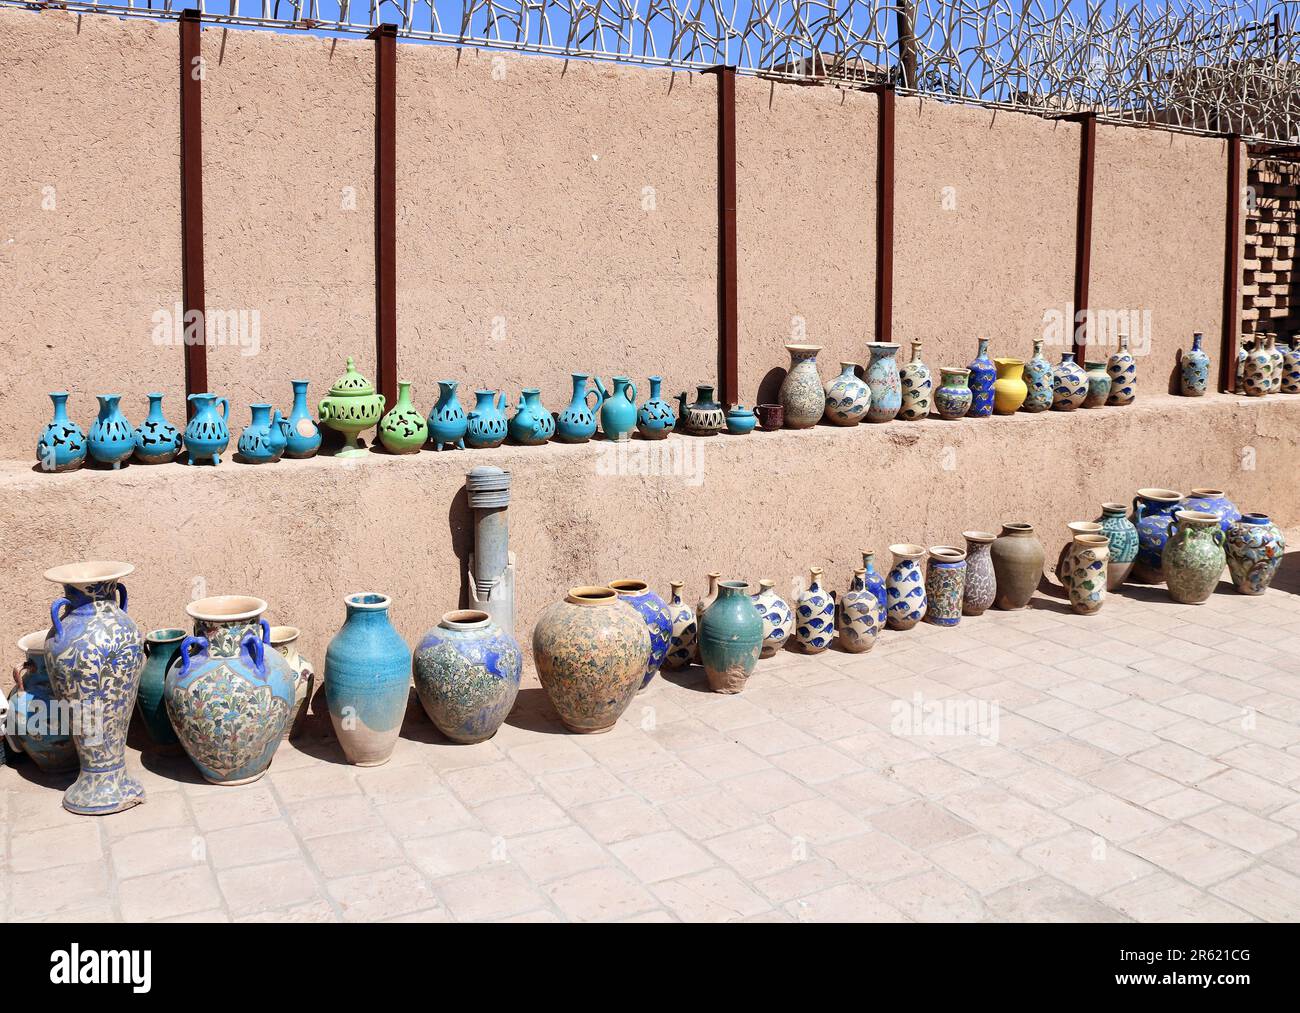 Traditional iranian souvenirs - colorful clay pots and jugs, Yazd, Iran Stock Photo